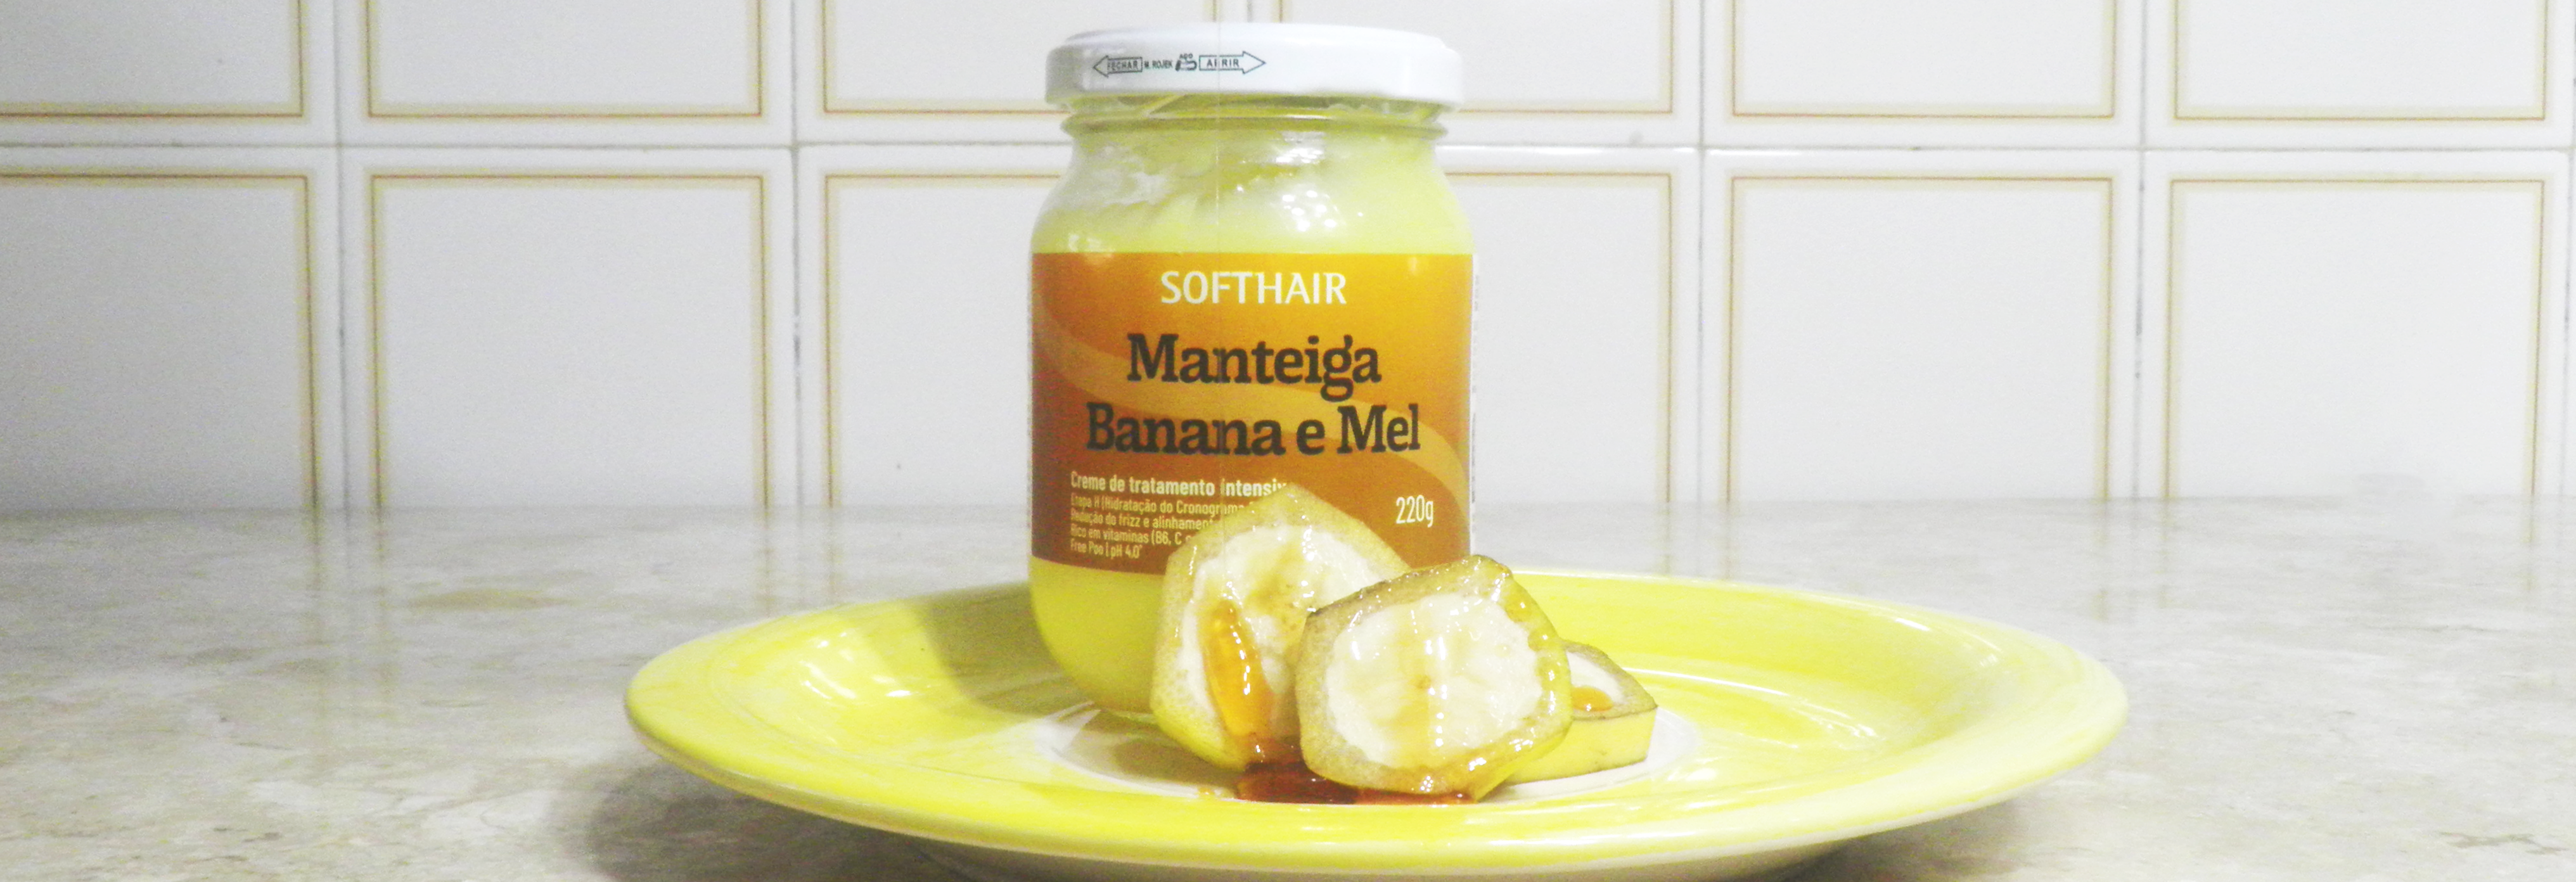 Resenha Manteiga Soft Hair Banana e Mel